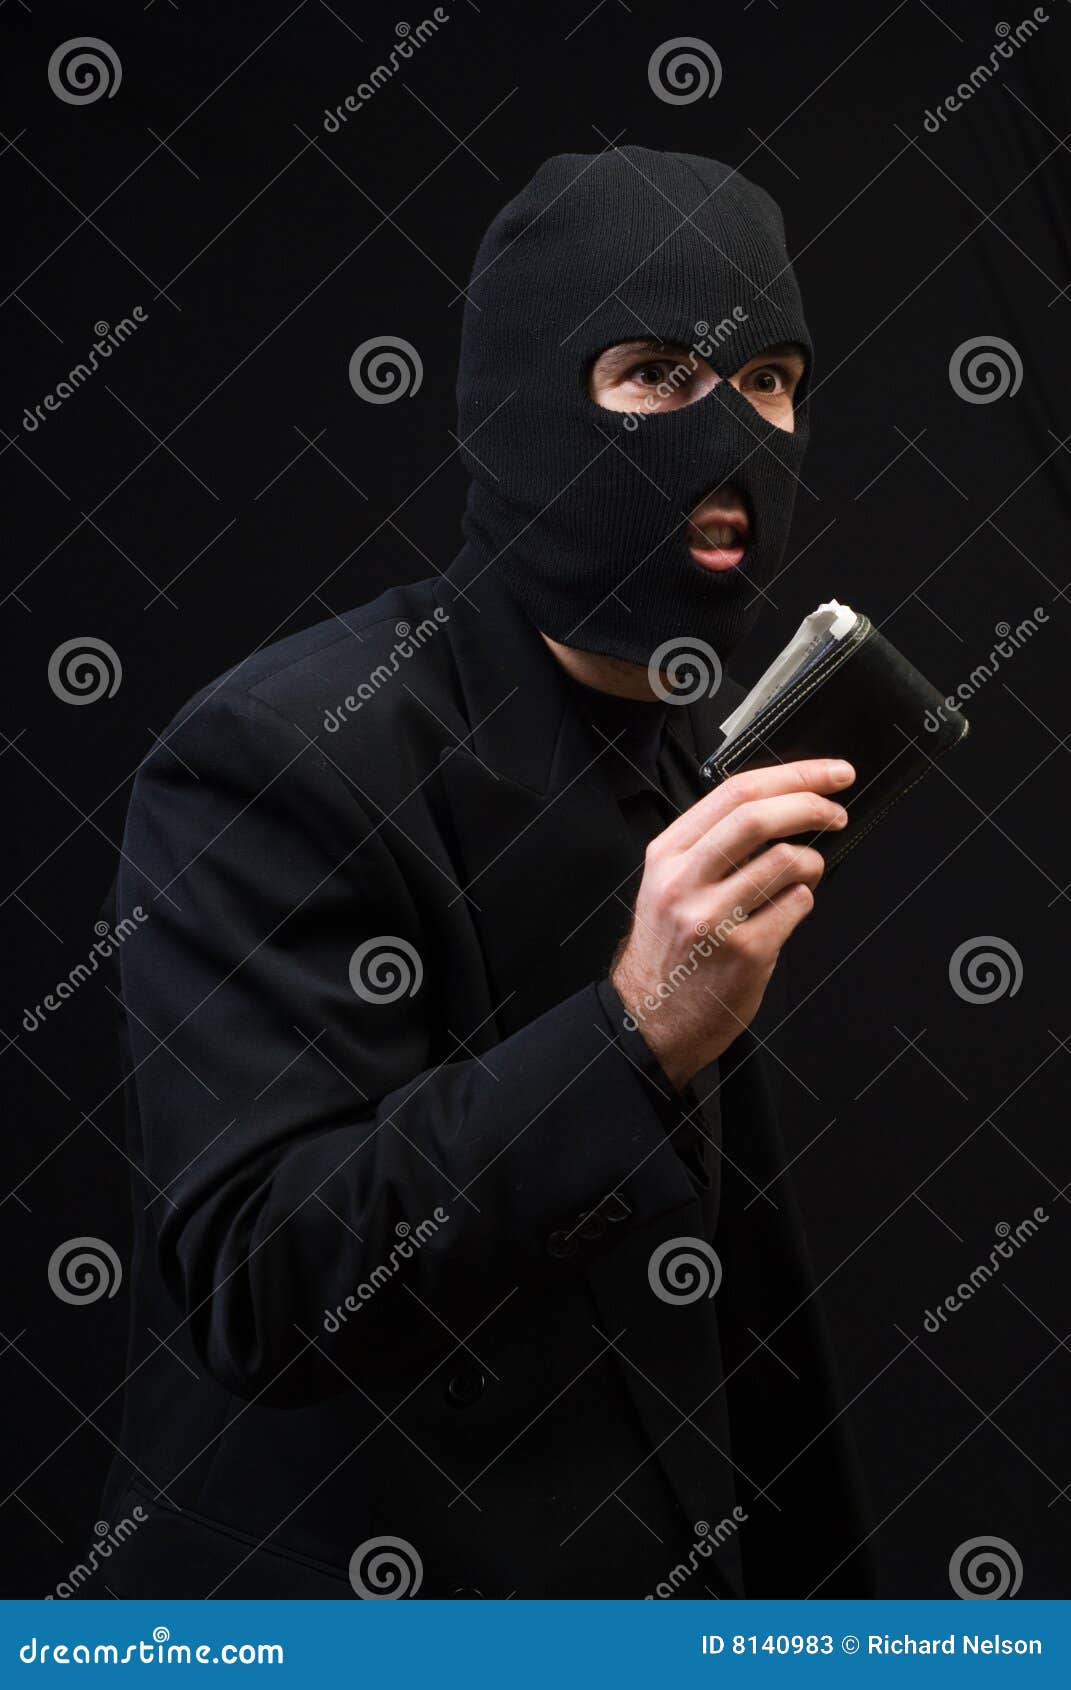 Stealing Company Money stock image. Image of bandit, human - 8140983